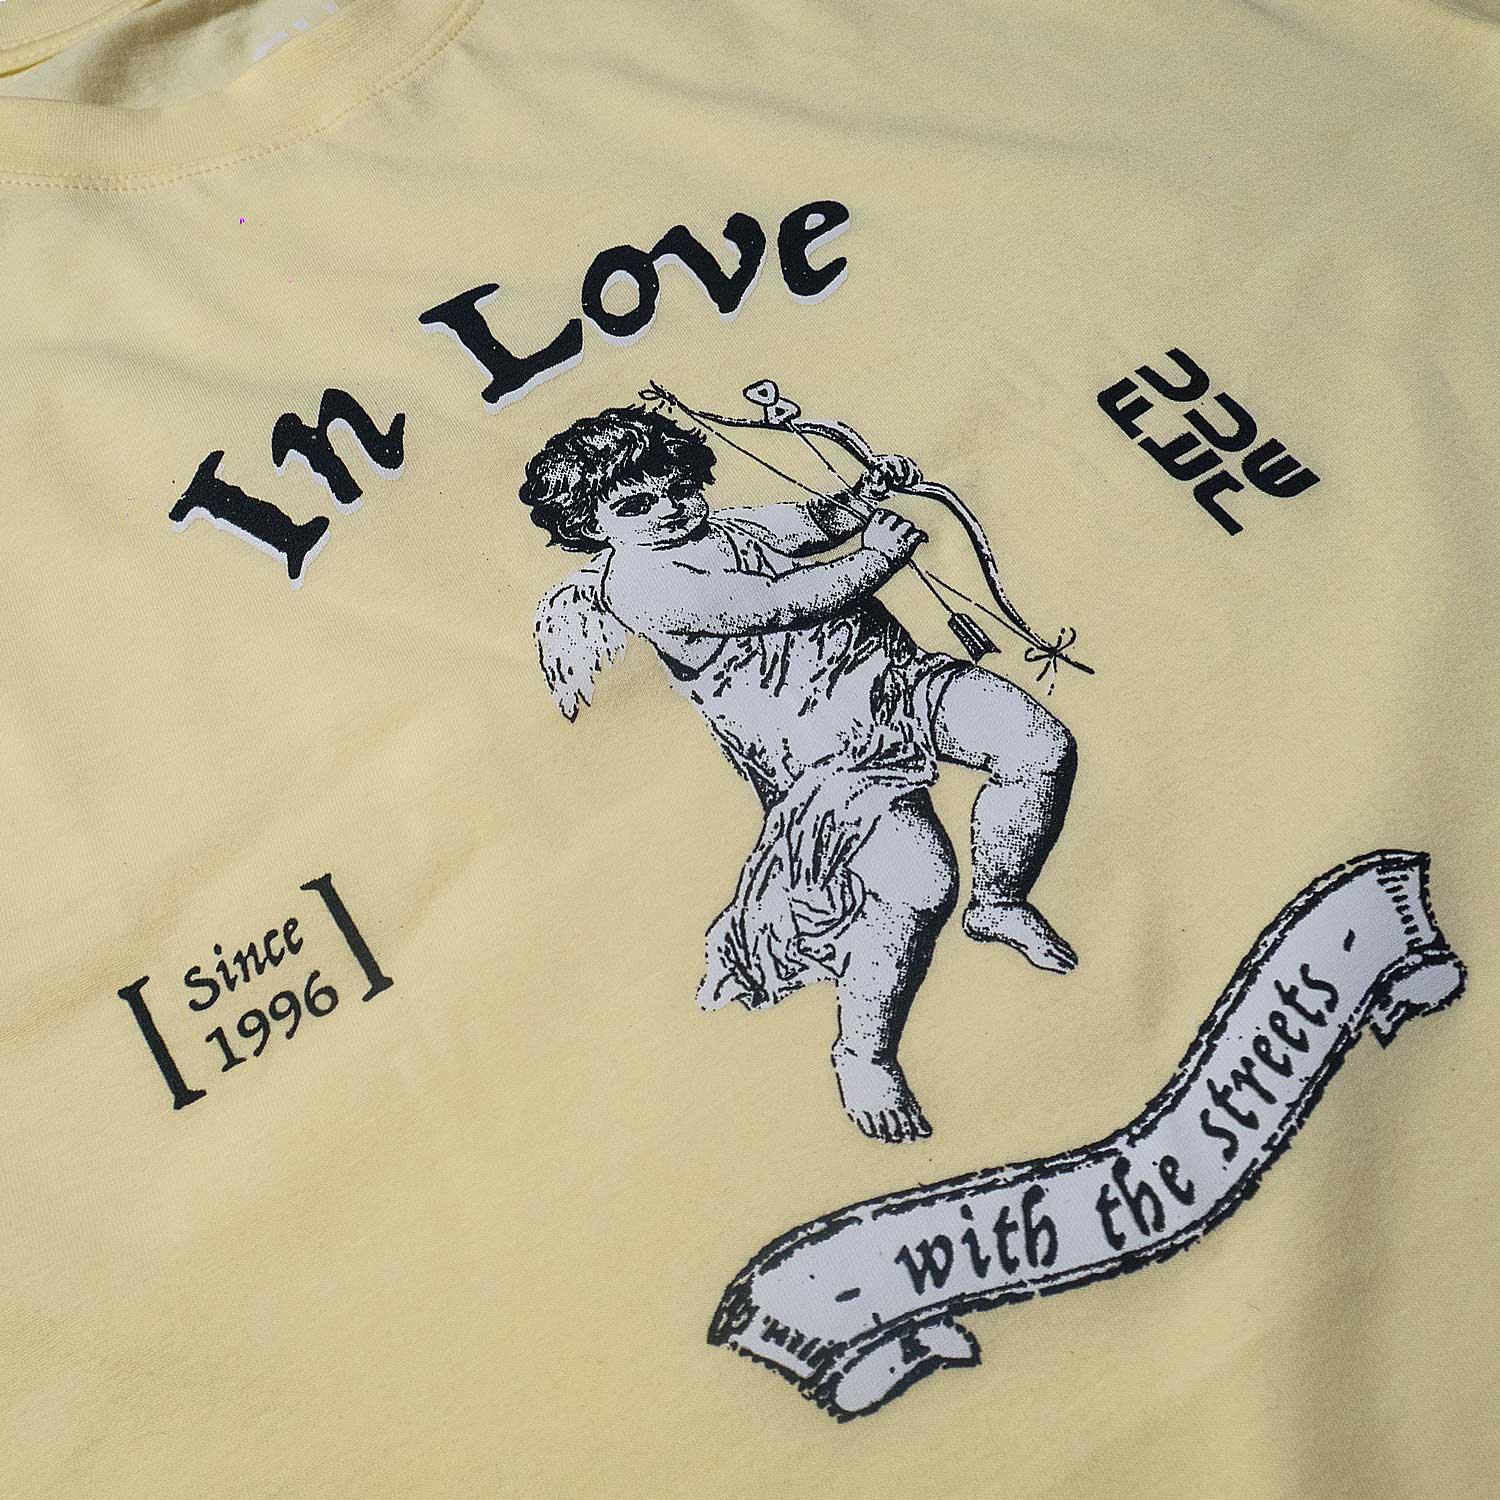 Camiseta In Love Amarela - Future Skateboards